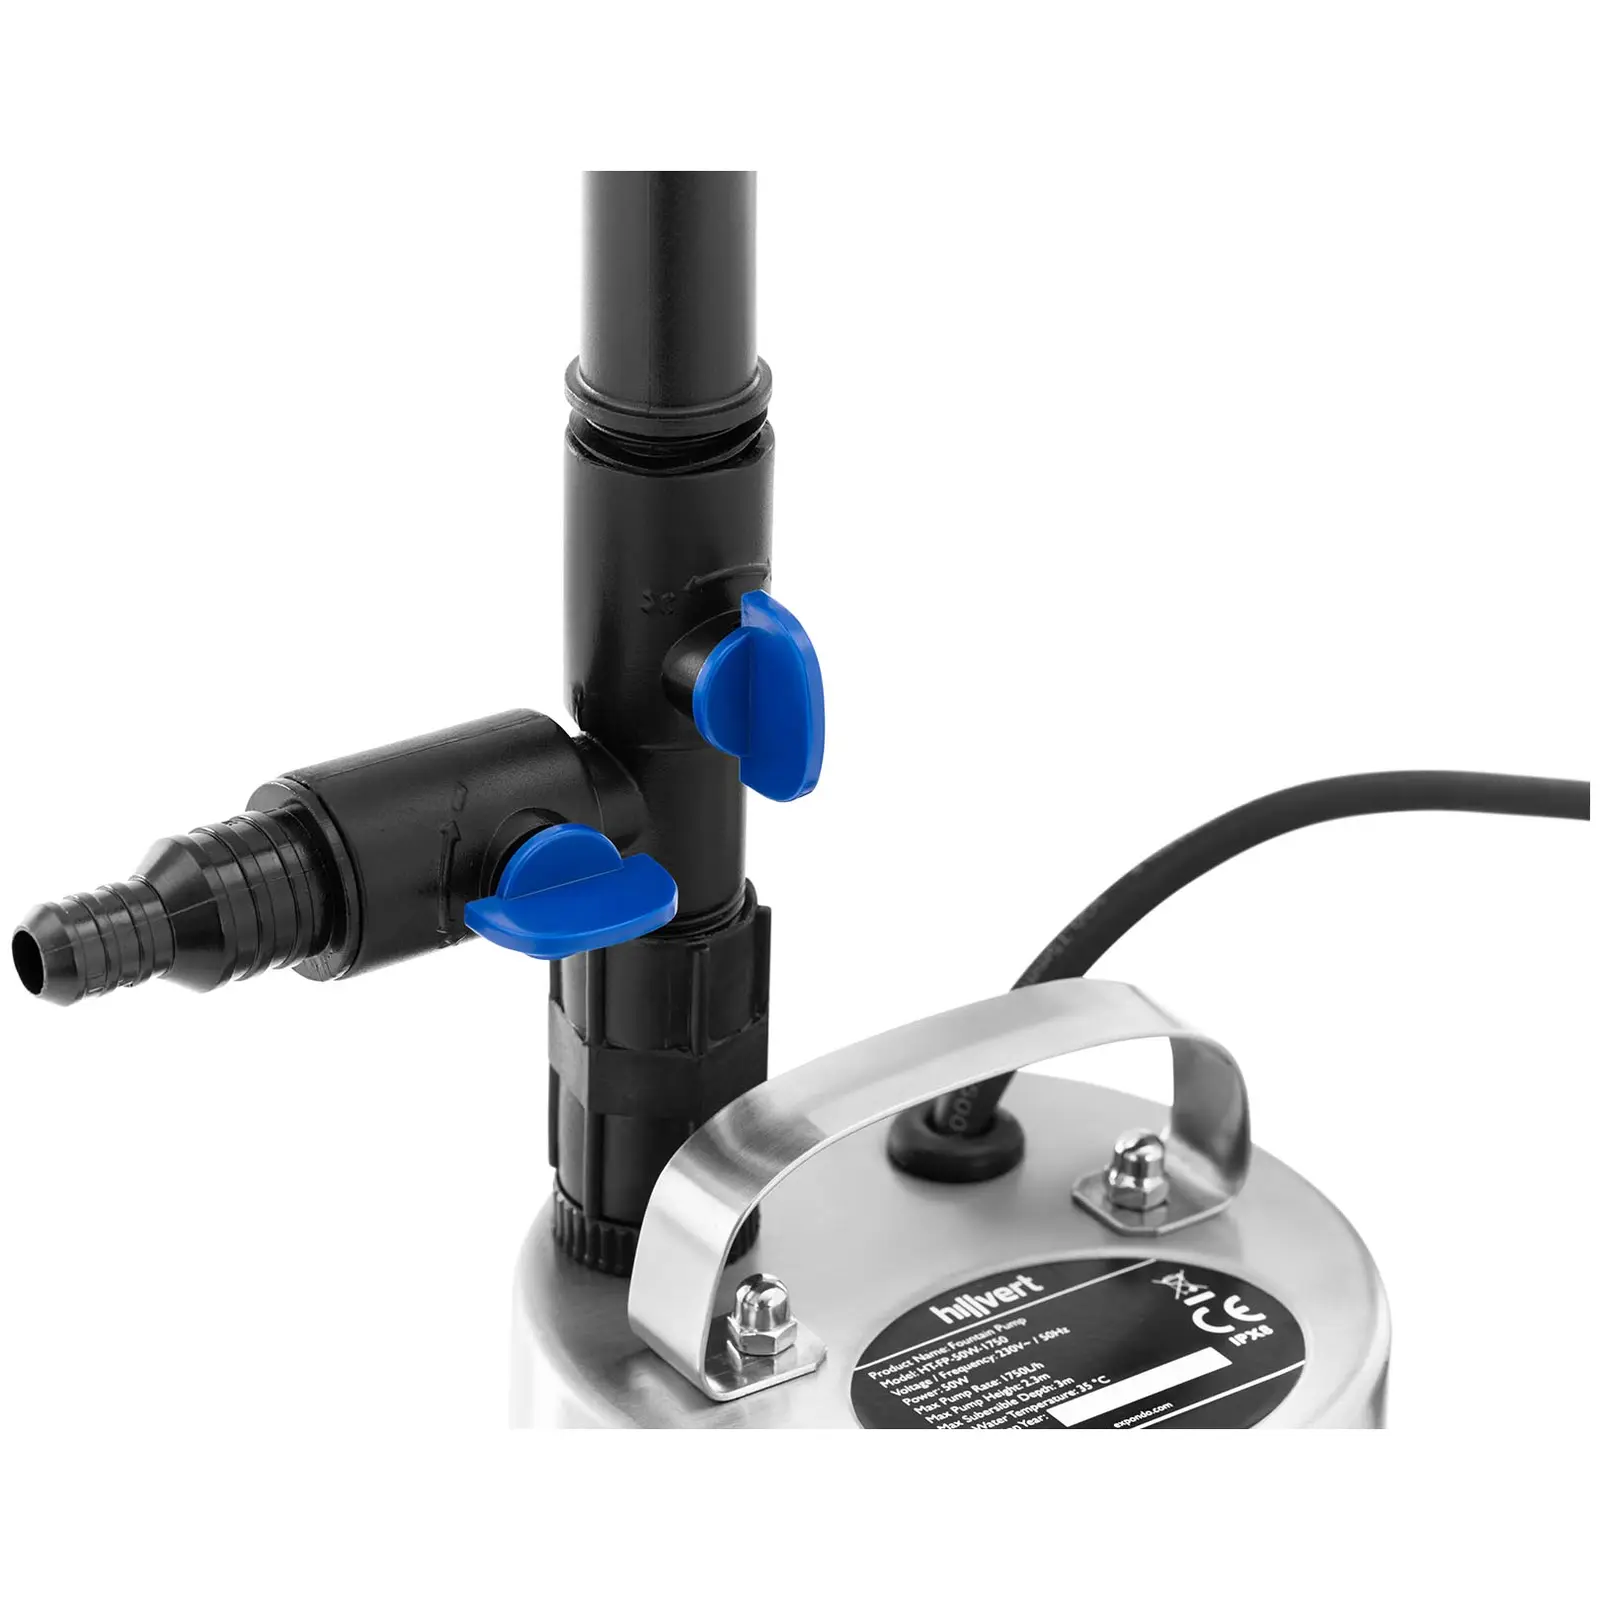 Fountain pump - 1750 L/h - 0.19 bar - 4 nozzles